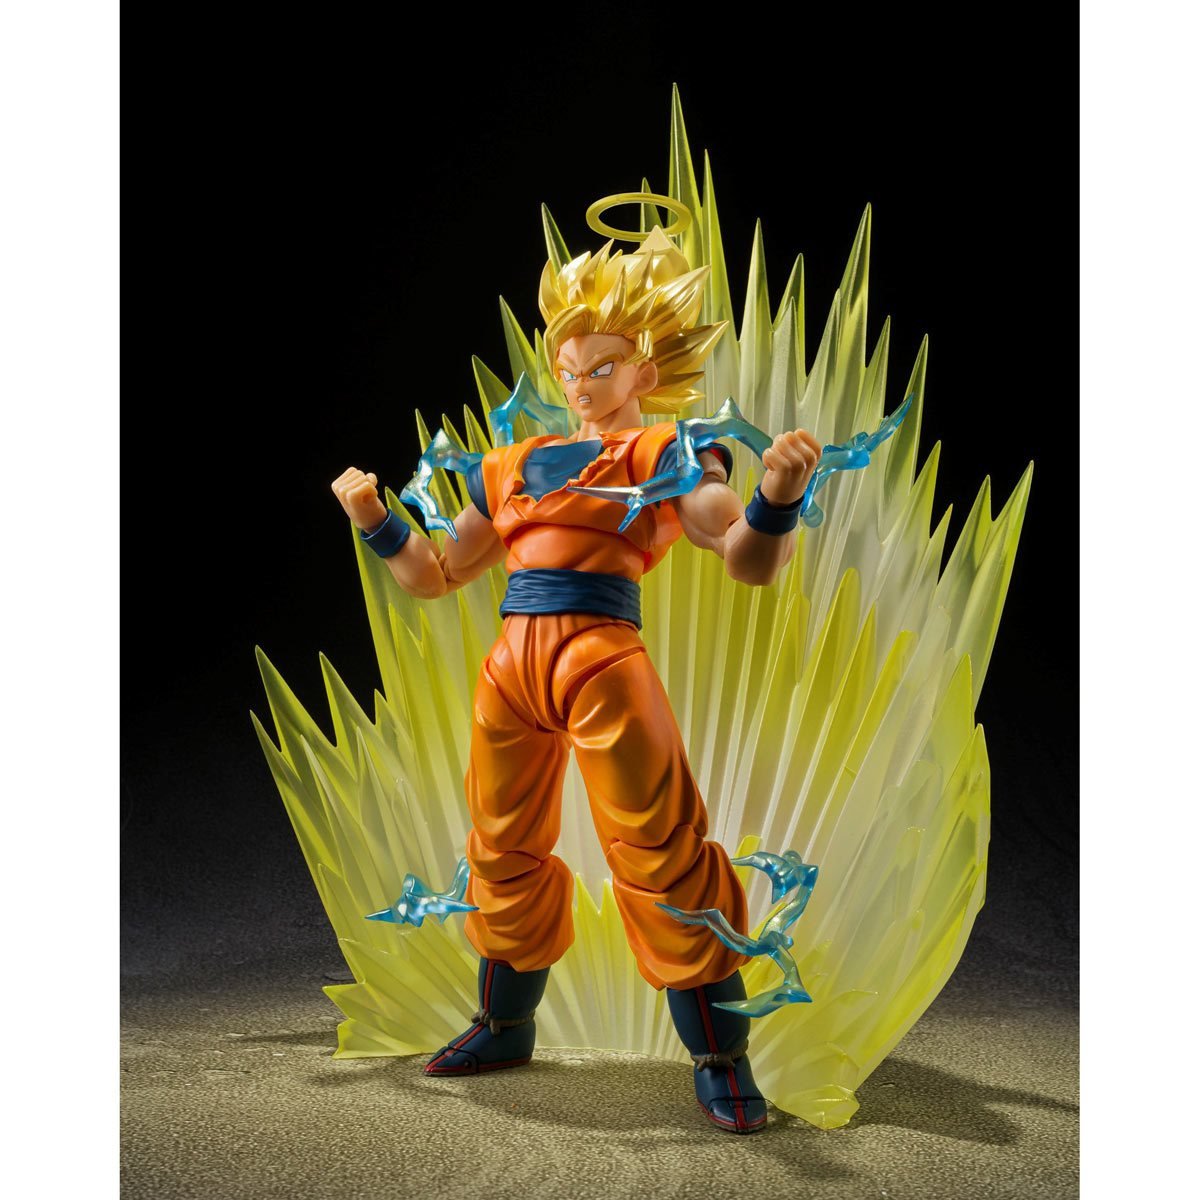 S.H. Figuarts Dragon Ball Z Super Saiyan 3 Goku Action Figure